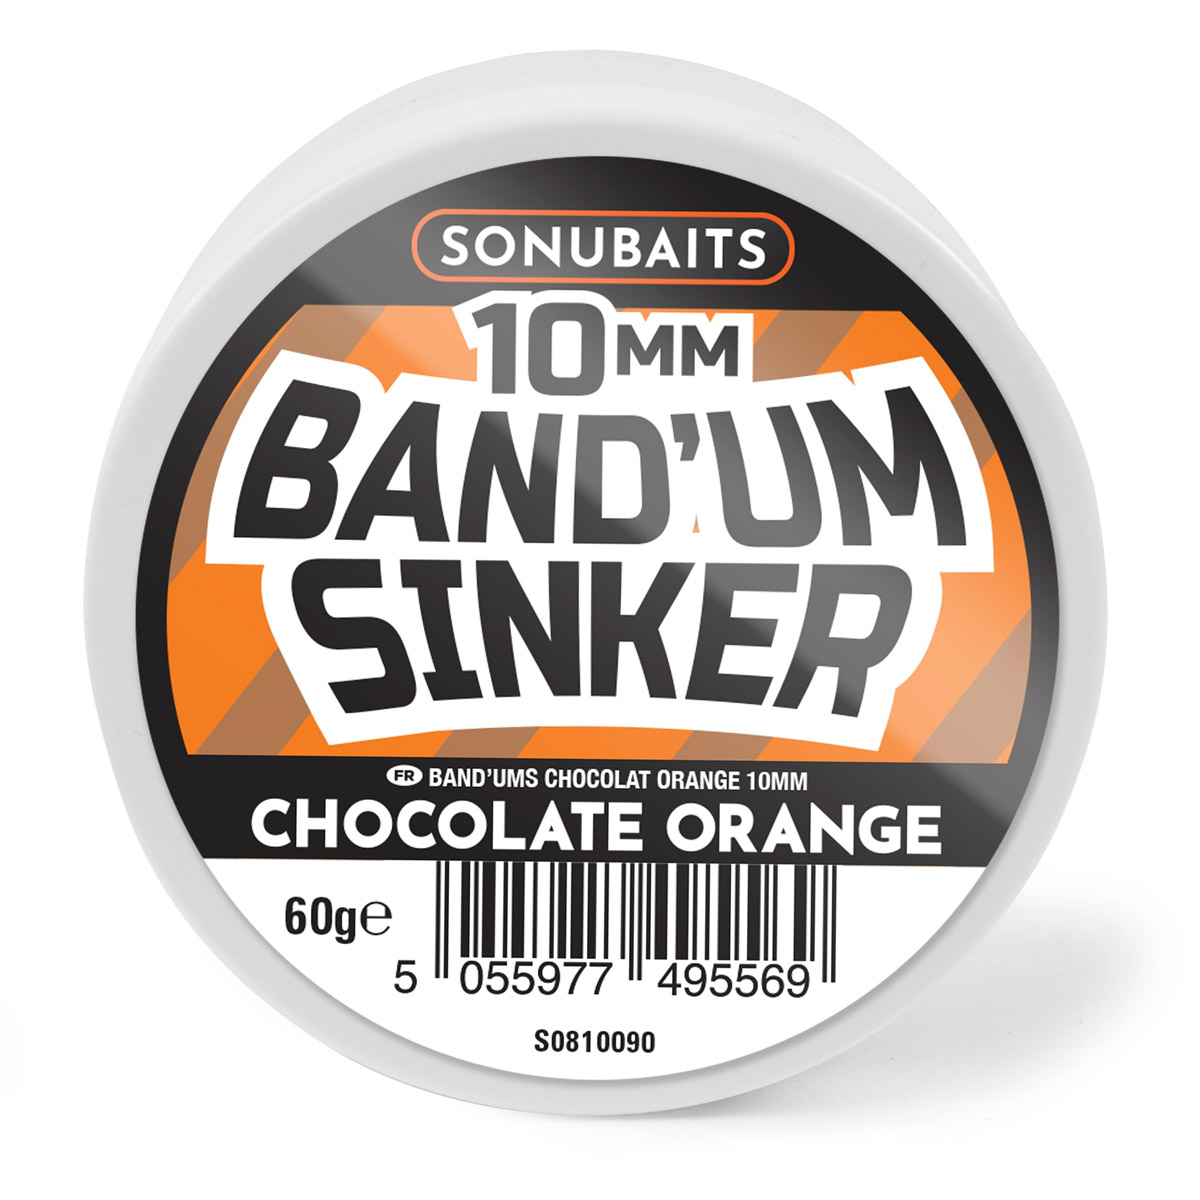 Sonubaits Band'um Sinker Chocolate Orange